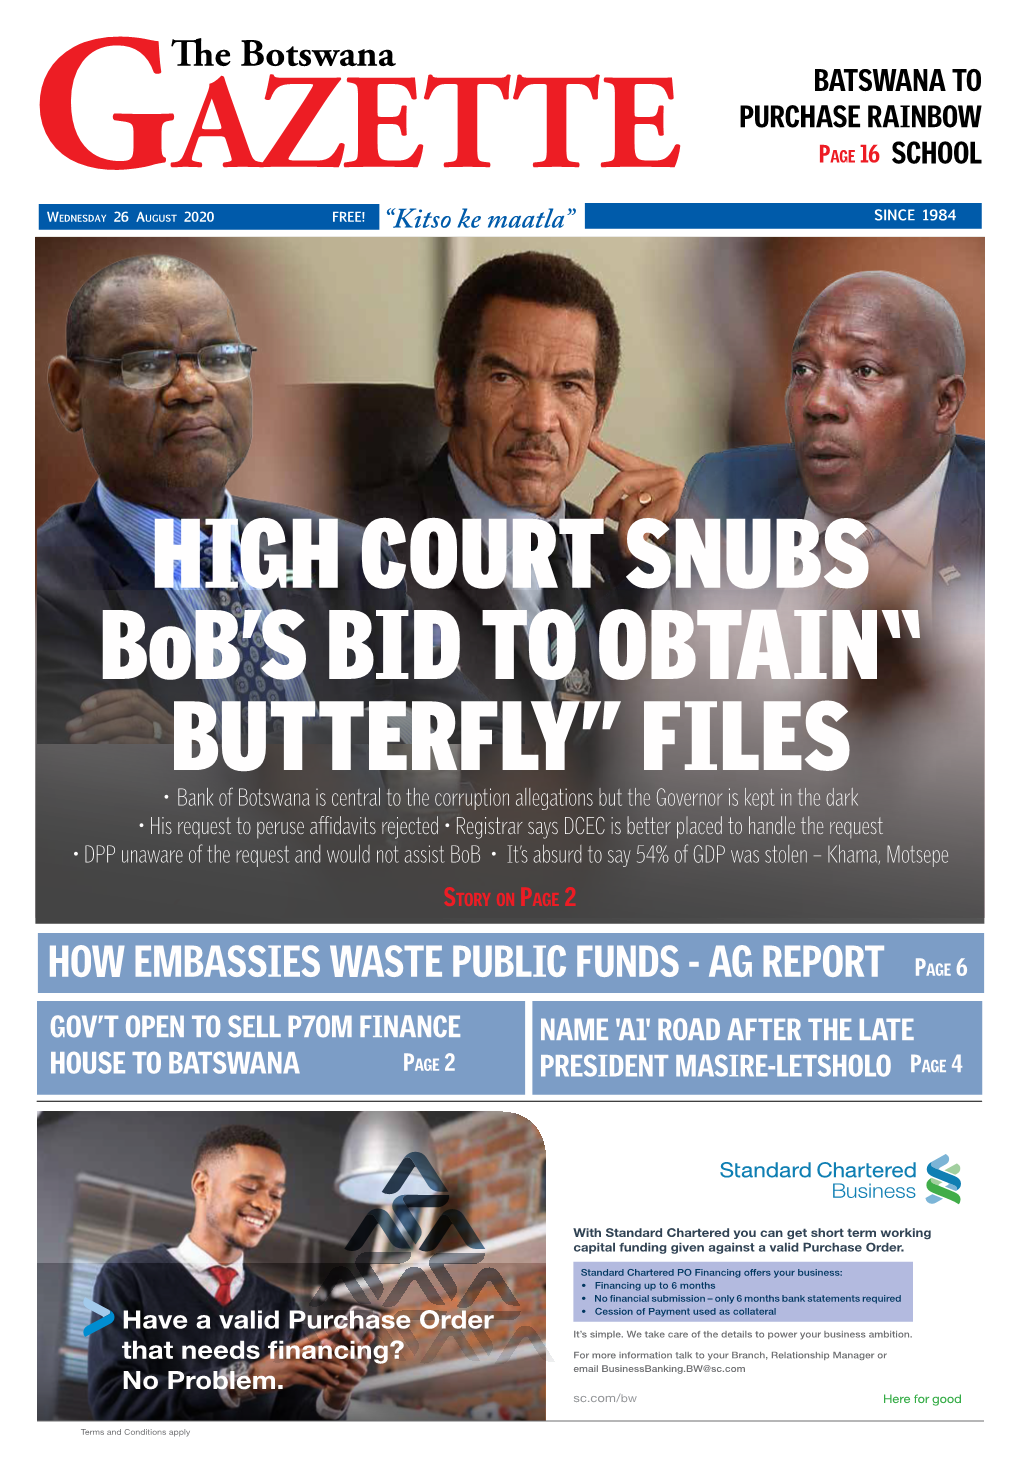 Botswana Gazette Wednesday 26 August 2020 Page 1 Batswana to Purchase Rainbow Page 16 School